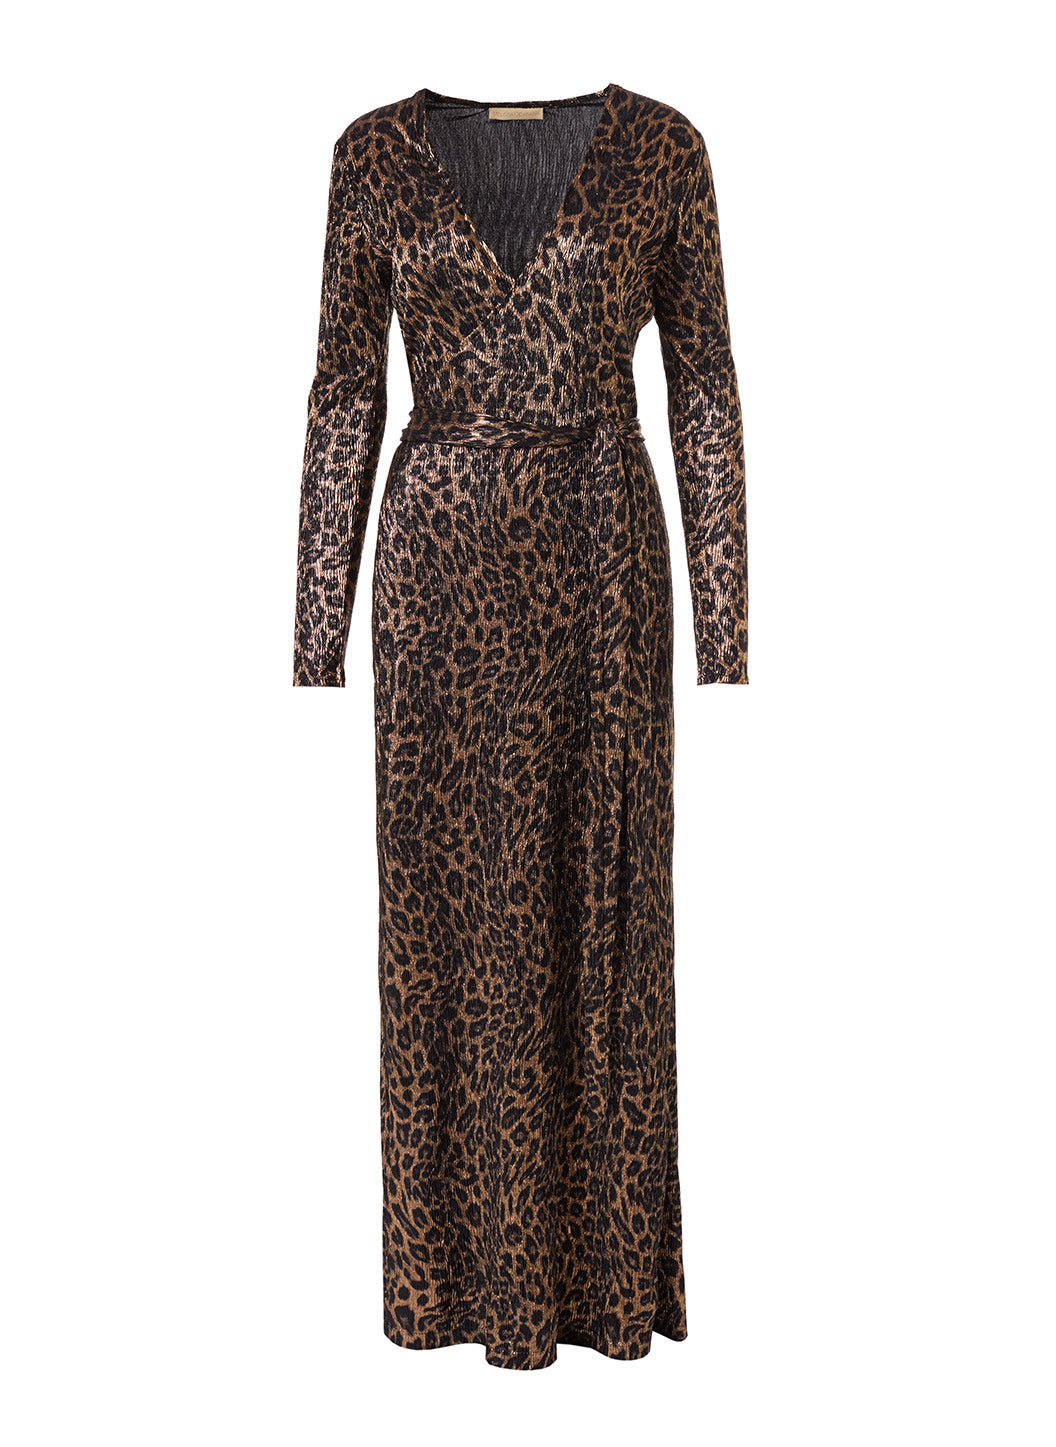 Look 3 Wrap Maxi Dress Leopard - FINAL SALE